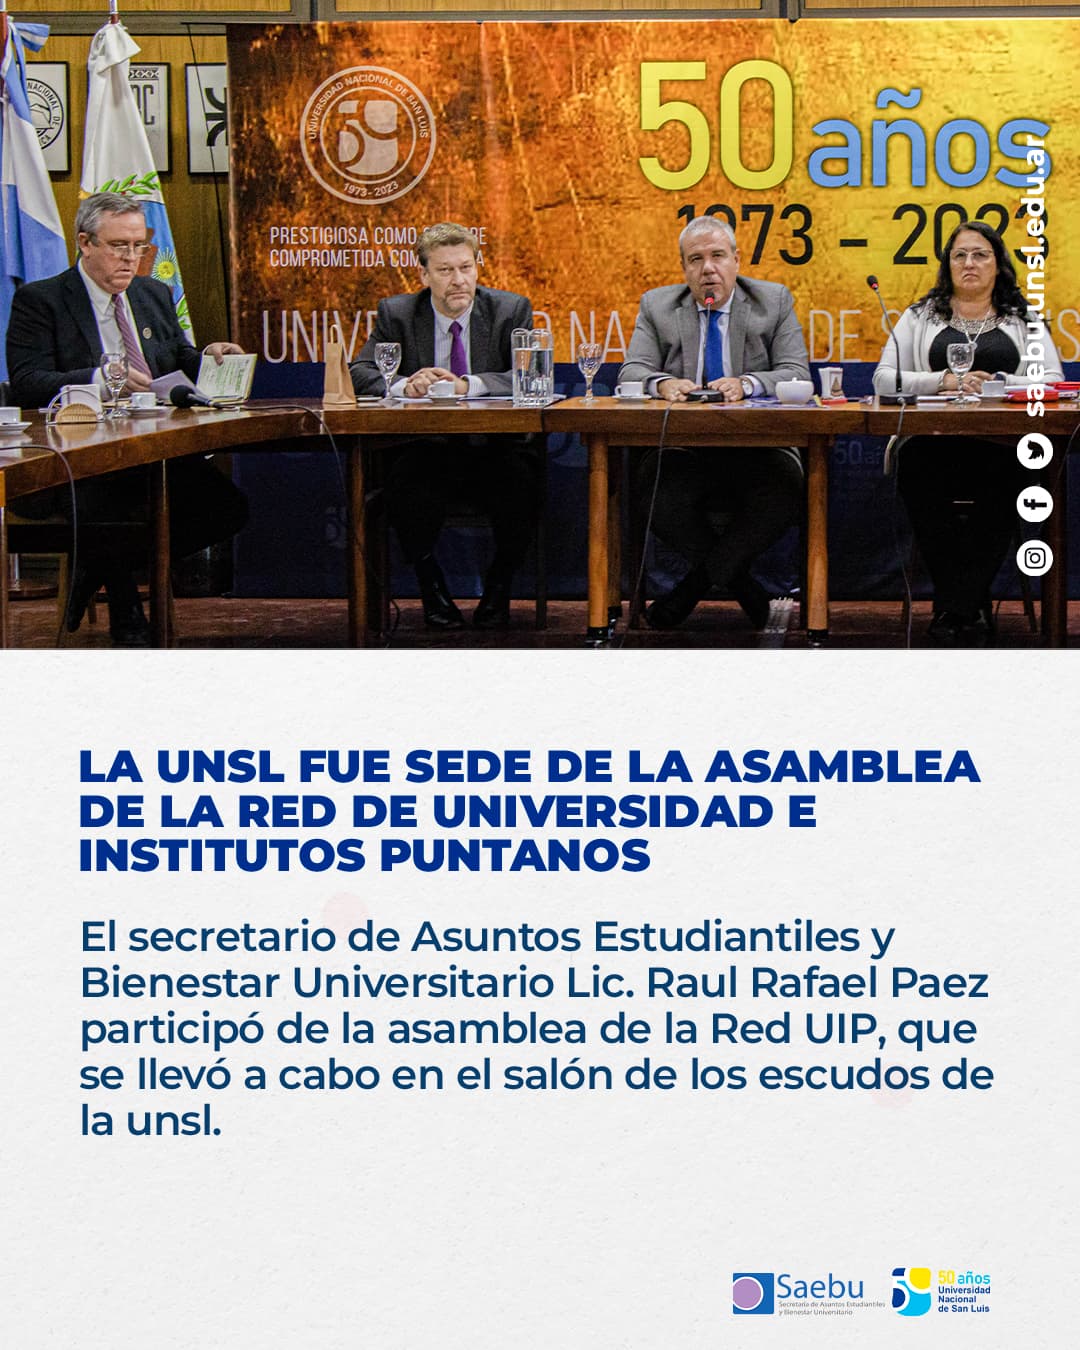 Asamblea de la Red de Universidad e Institutos Puntanos